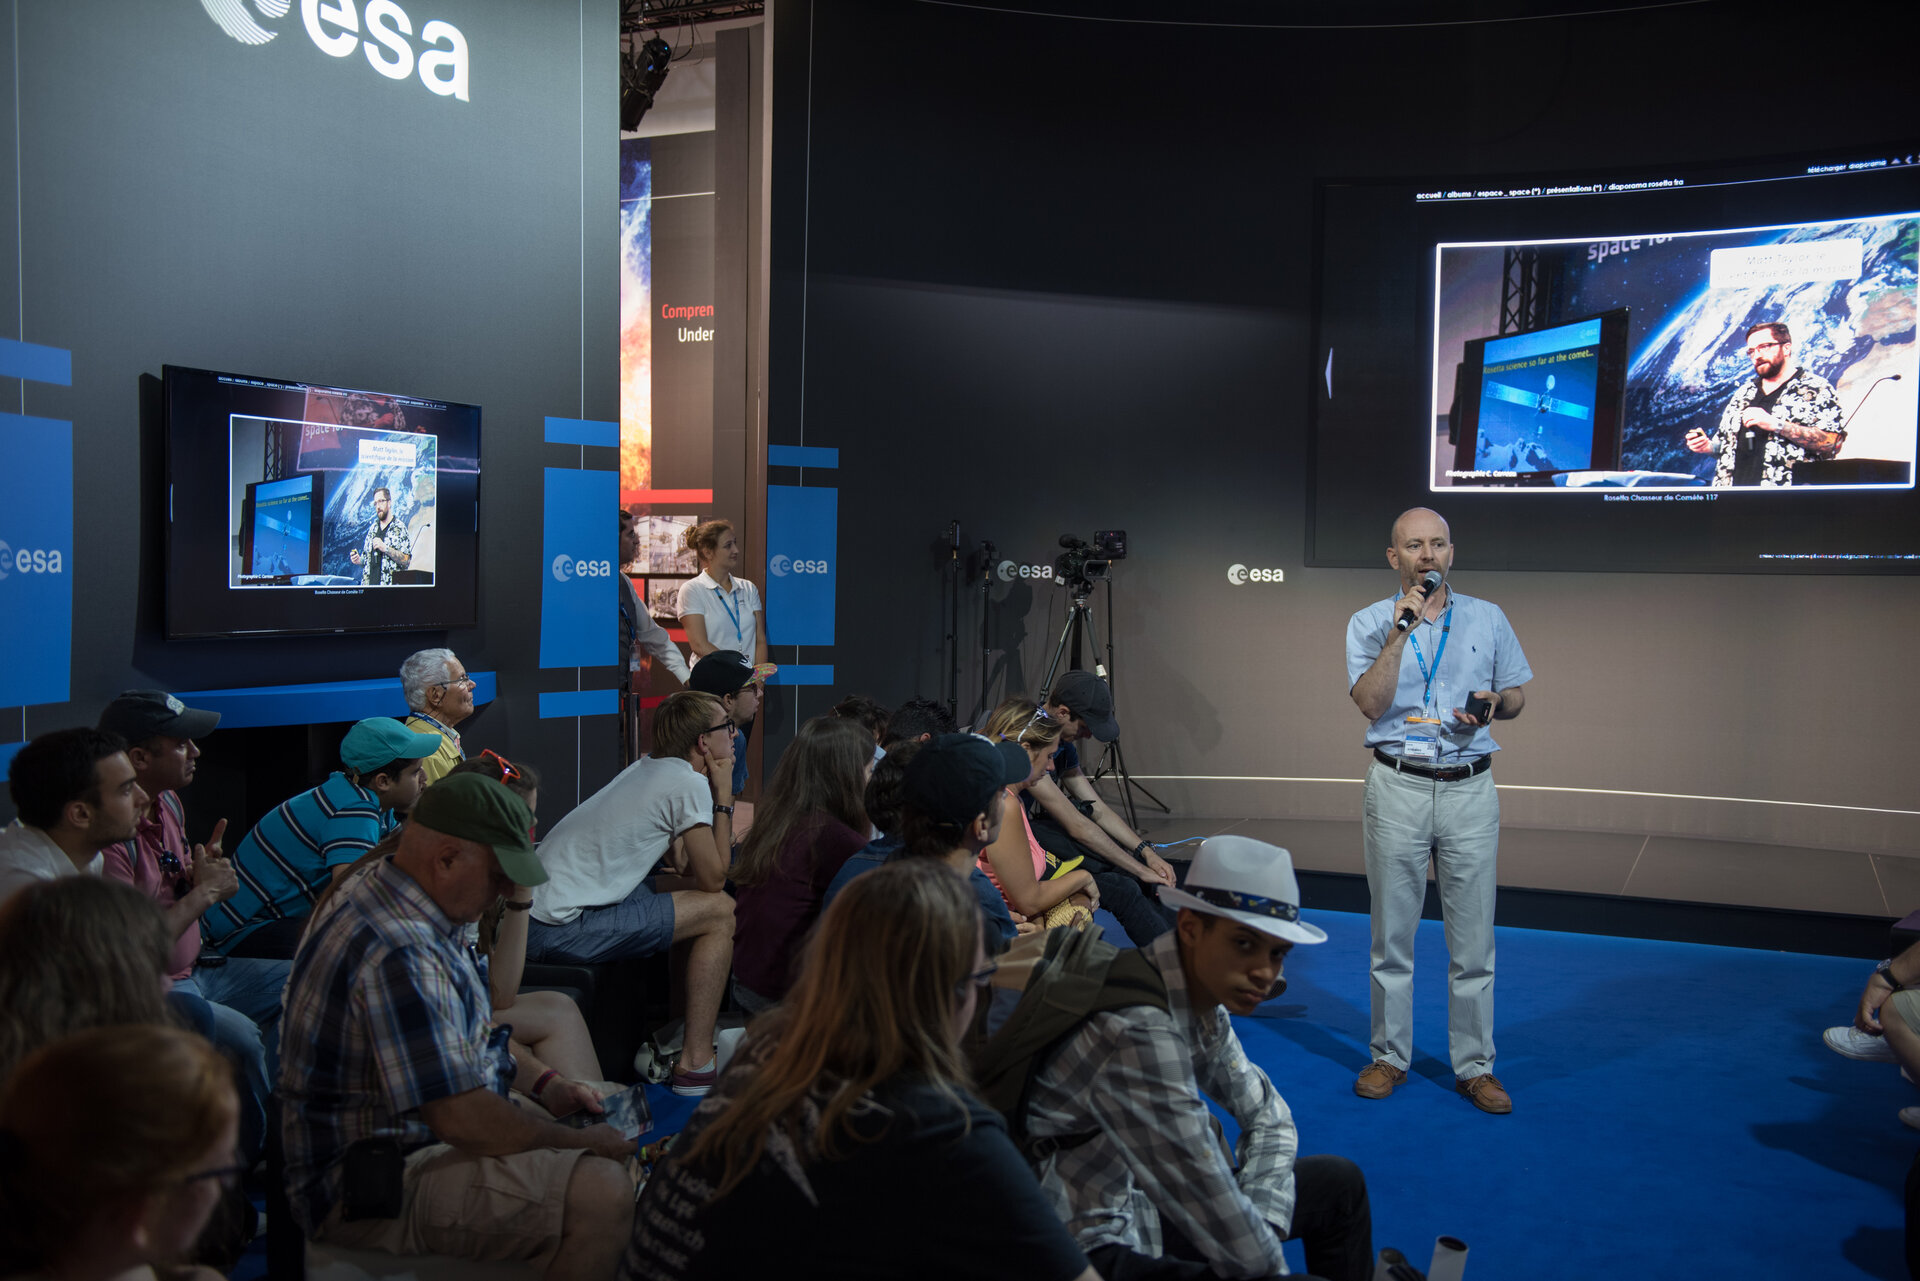  Rosetta presentation at the ESA Pavilion